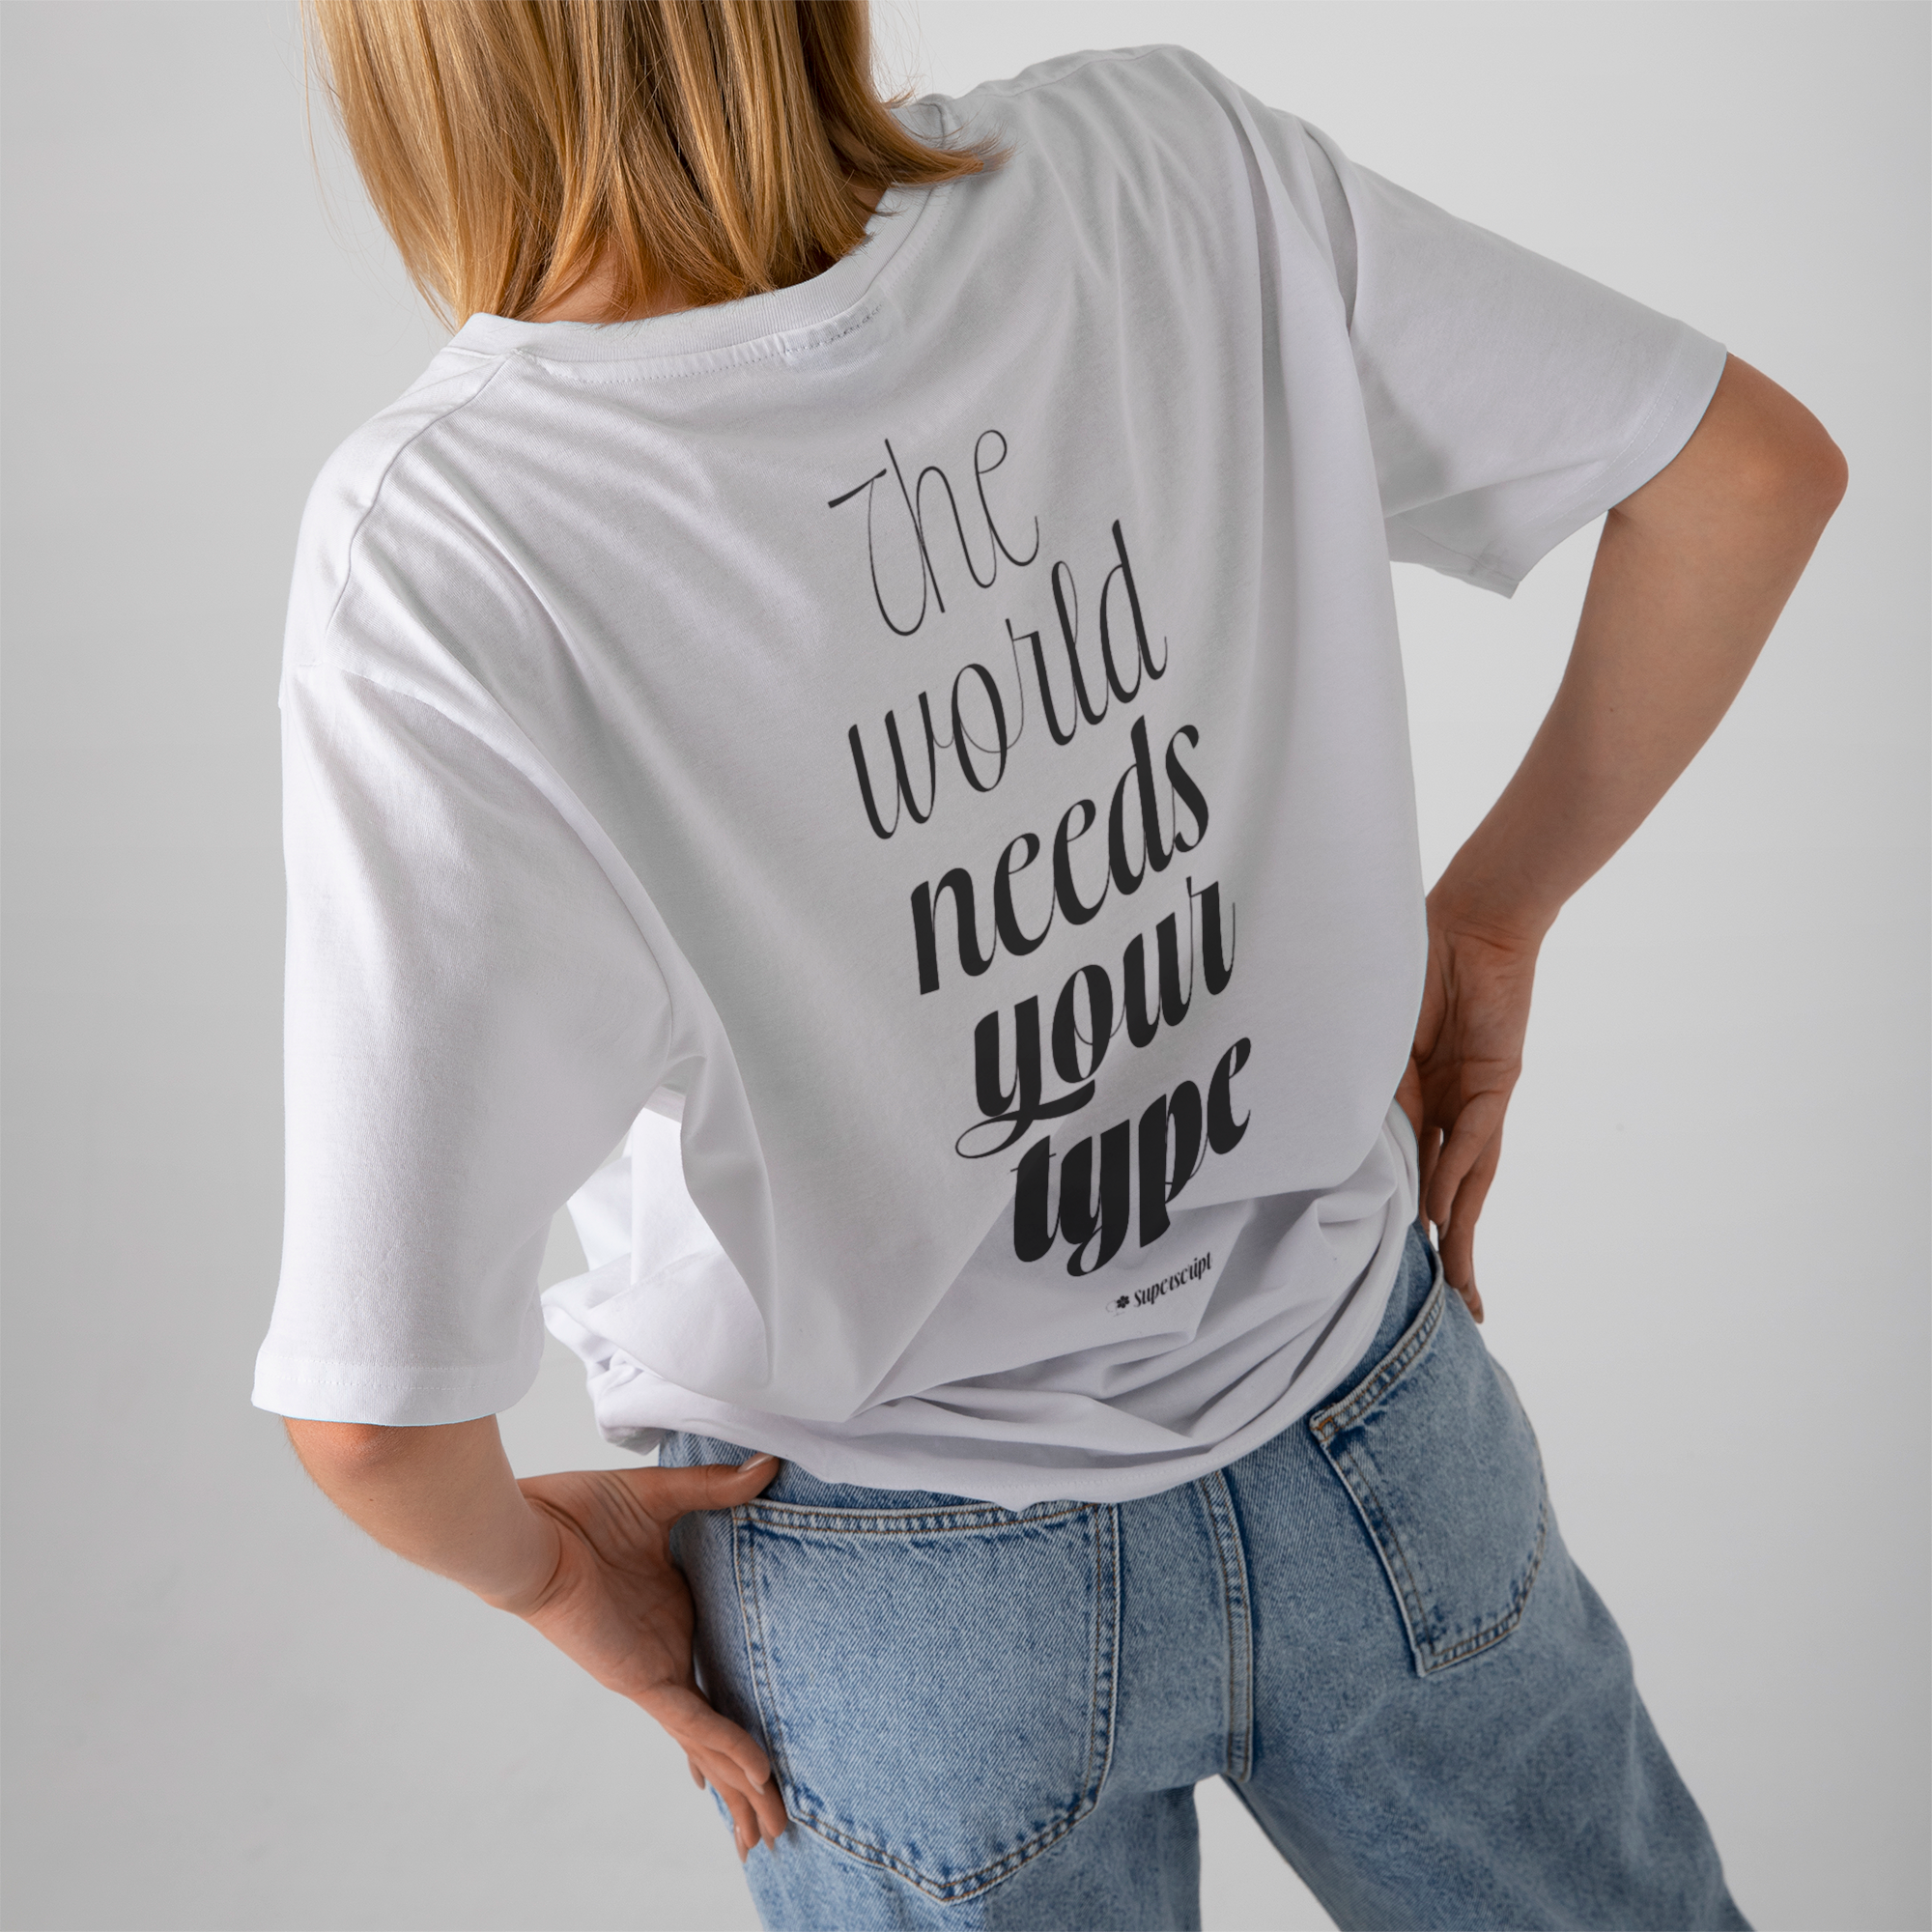 The World Needs Your Type Superscript T-shirt